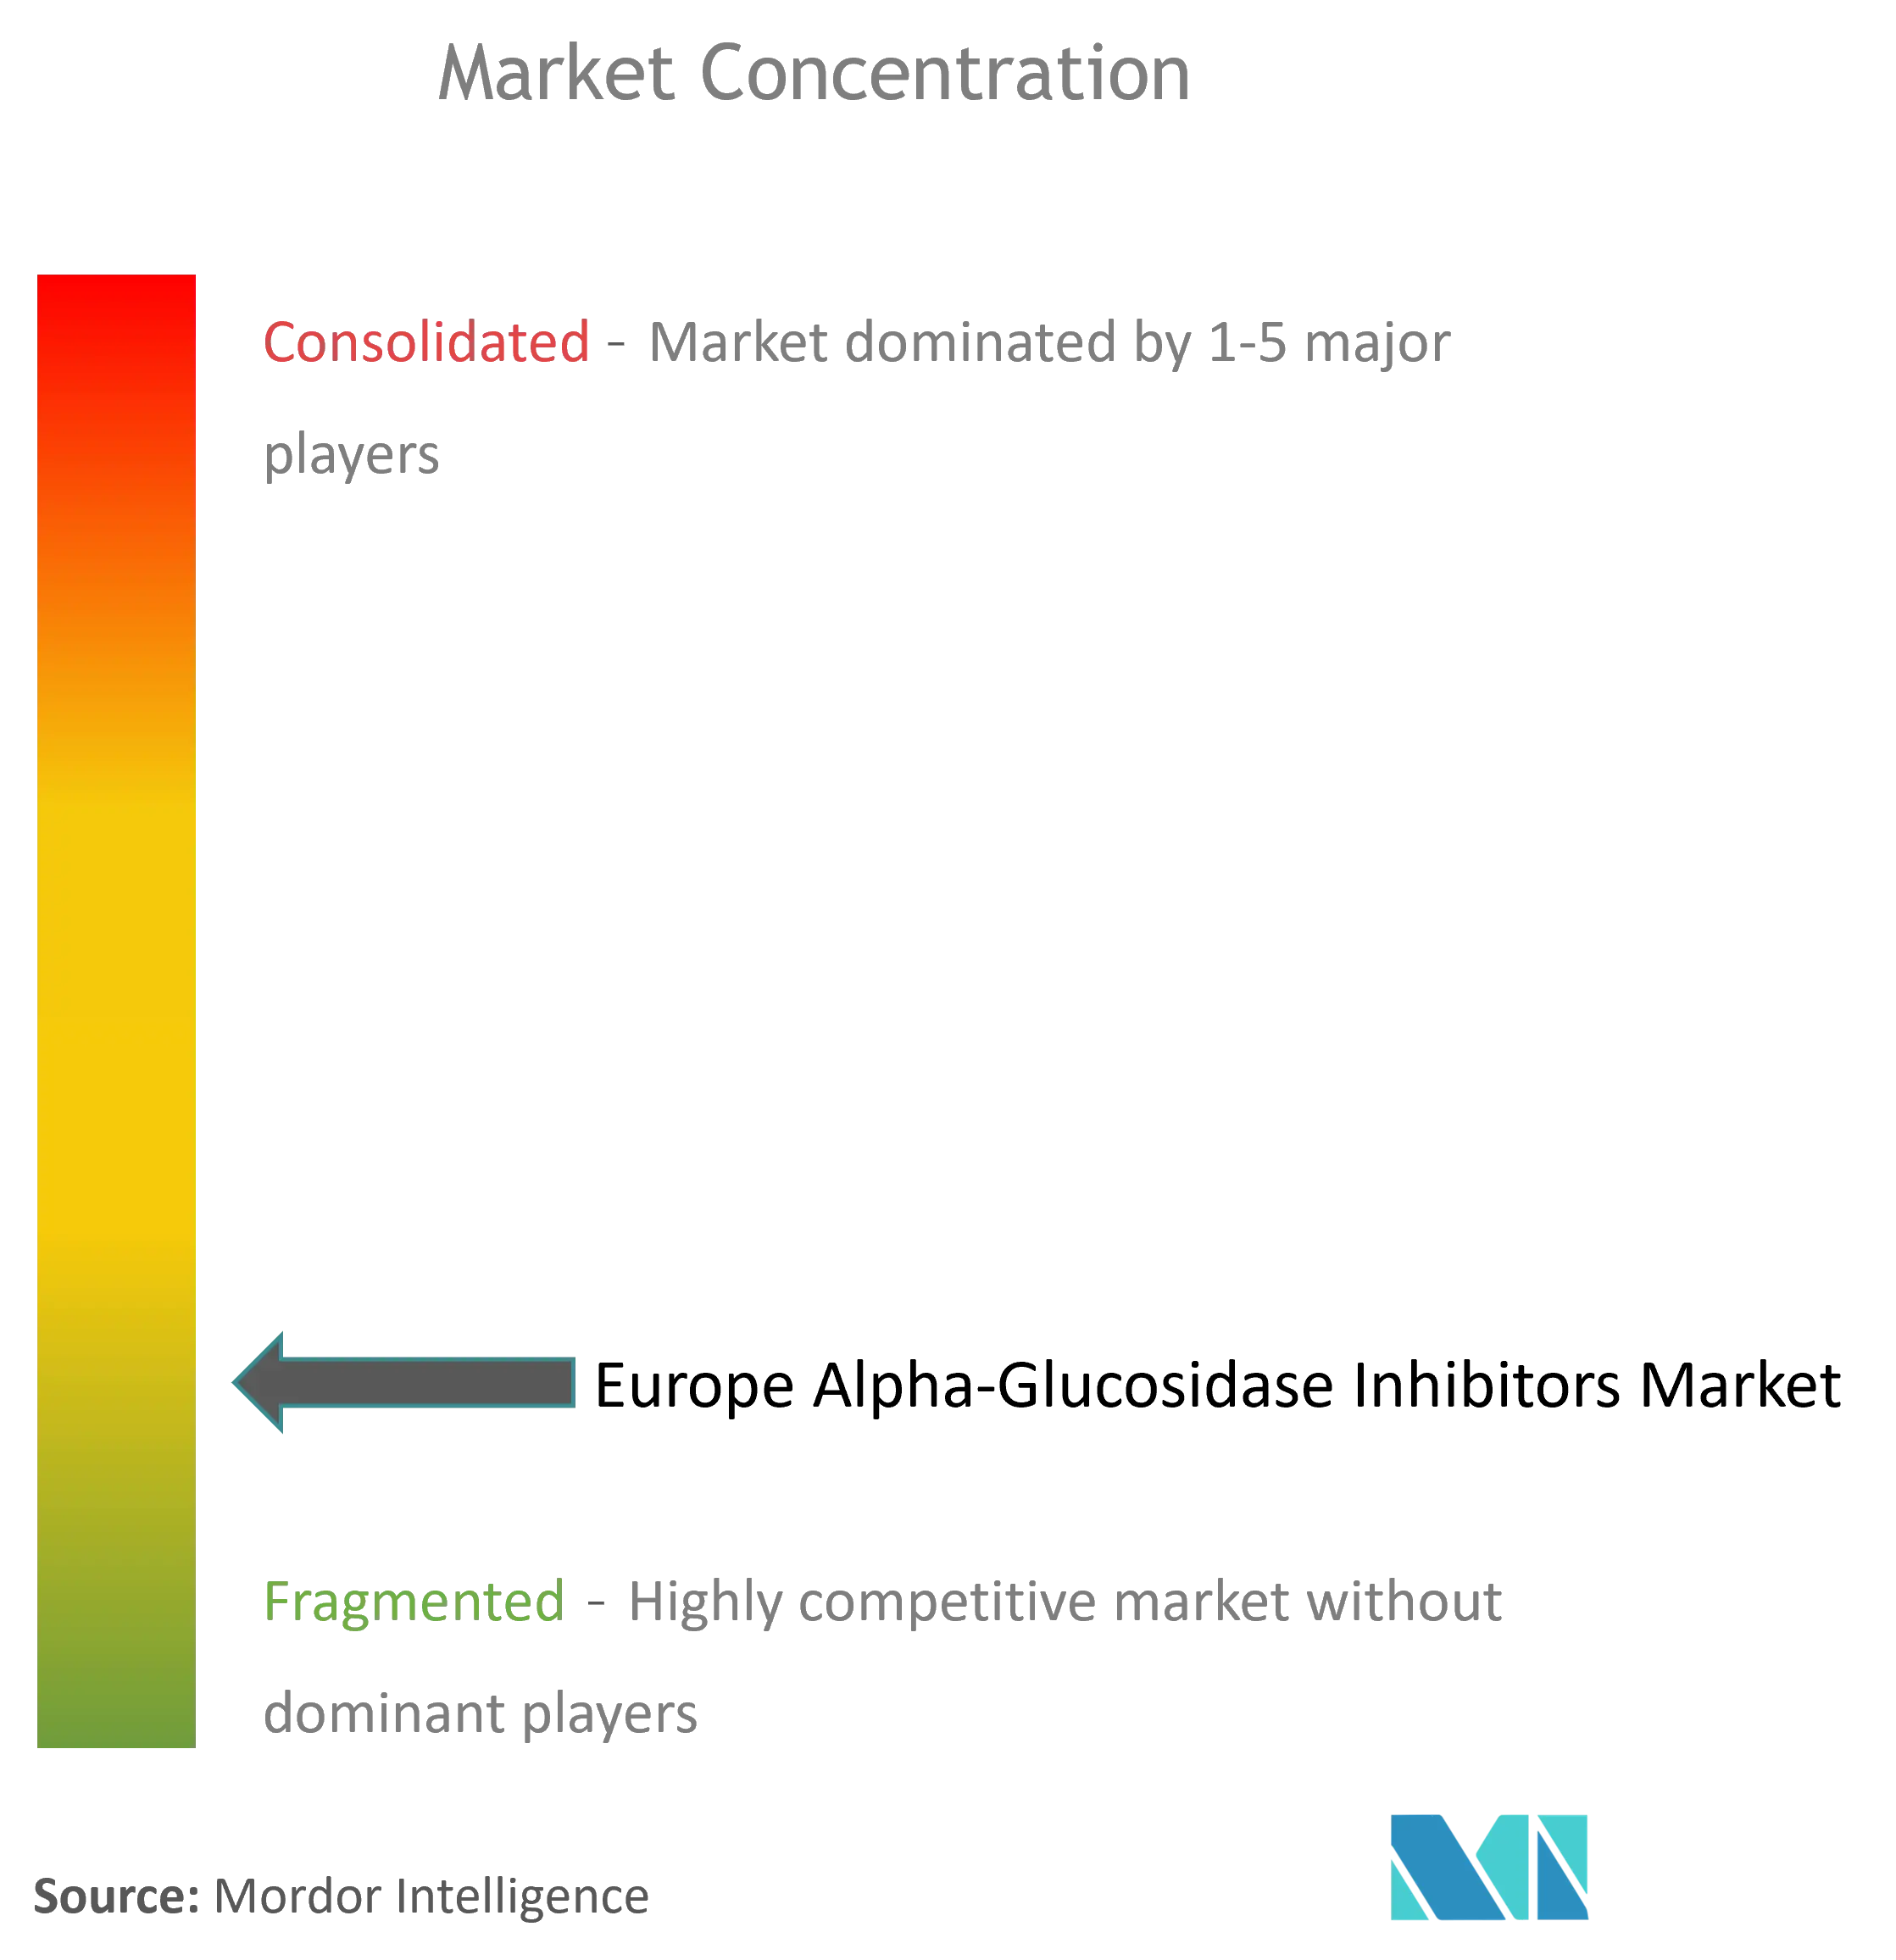 Europe Alpha-Glucosidase Inhibitors Market Concentration